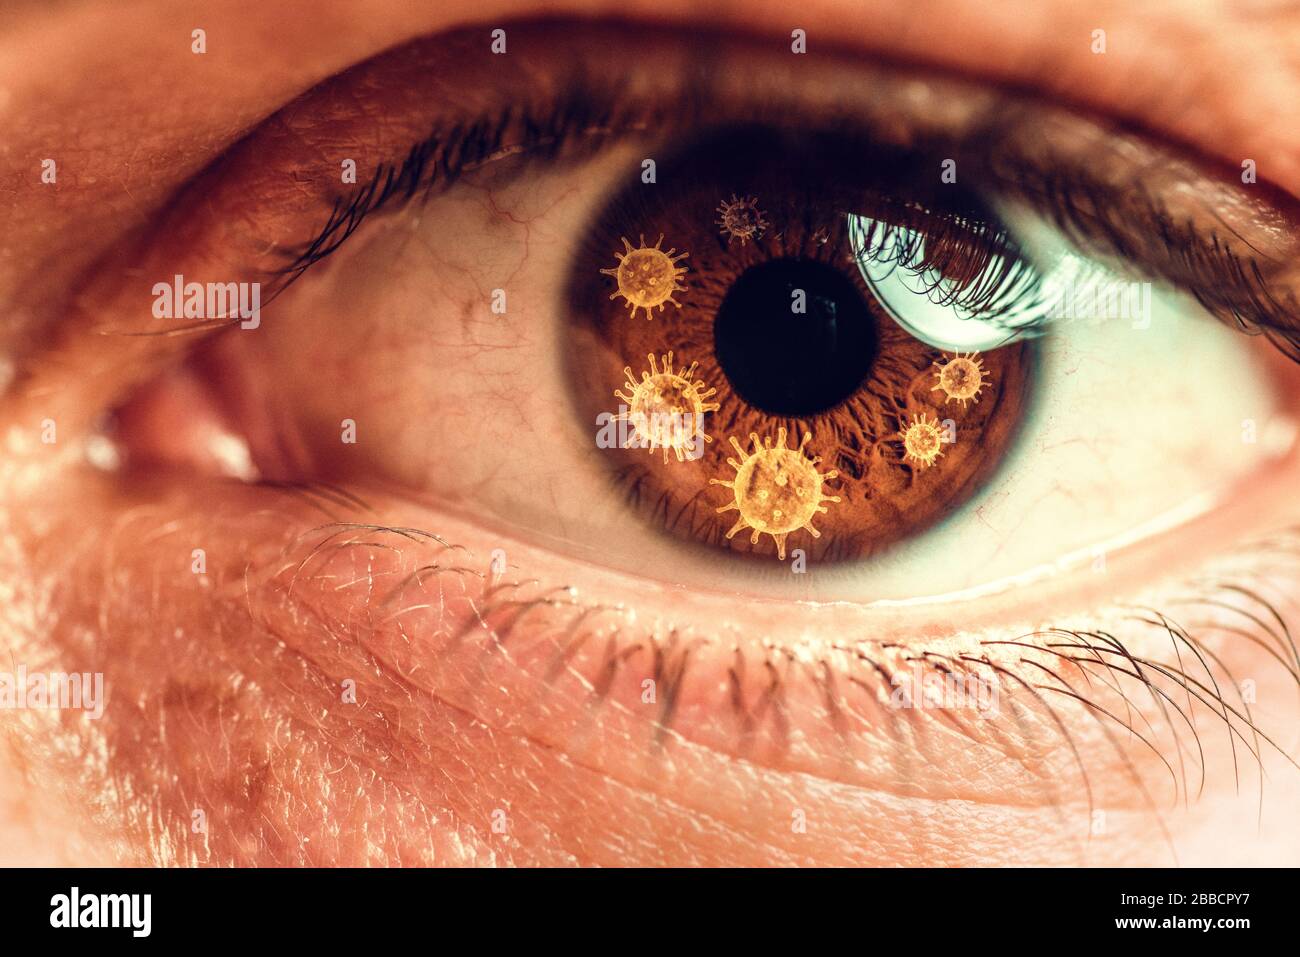 Close up, macro photo of human eye, iris, pupil, eye lashes, eye lids. Abstract corona virus theme Stock Photo